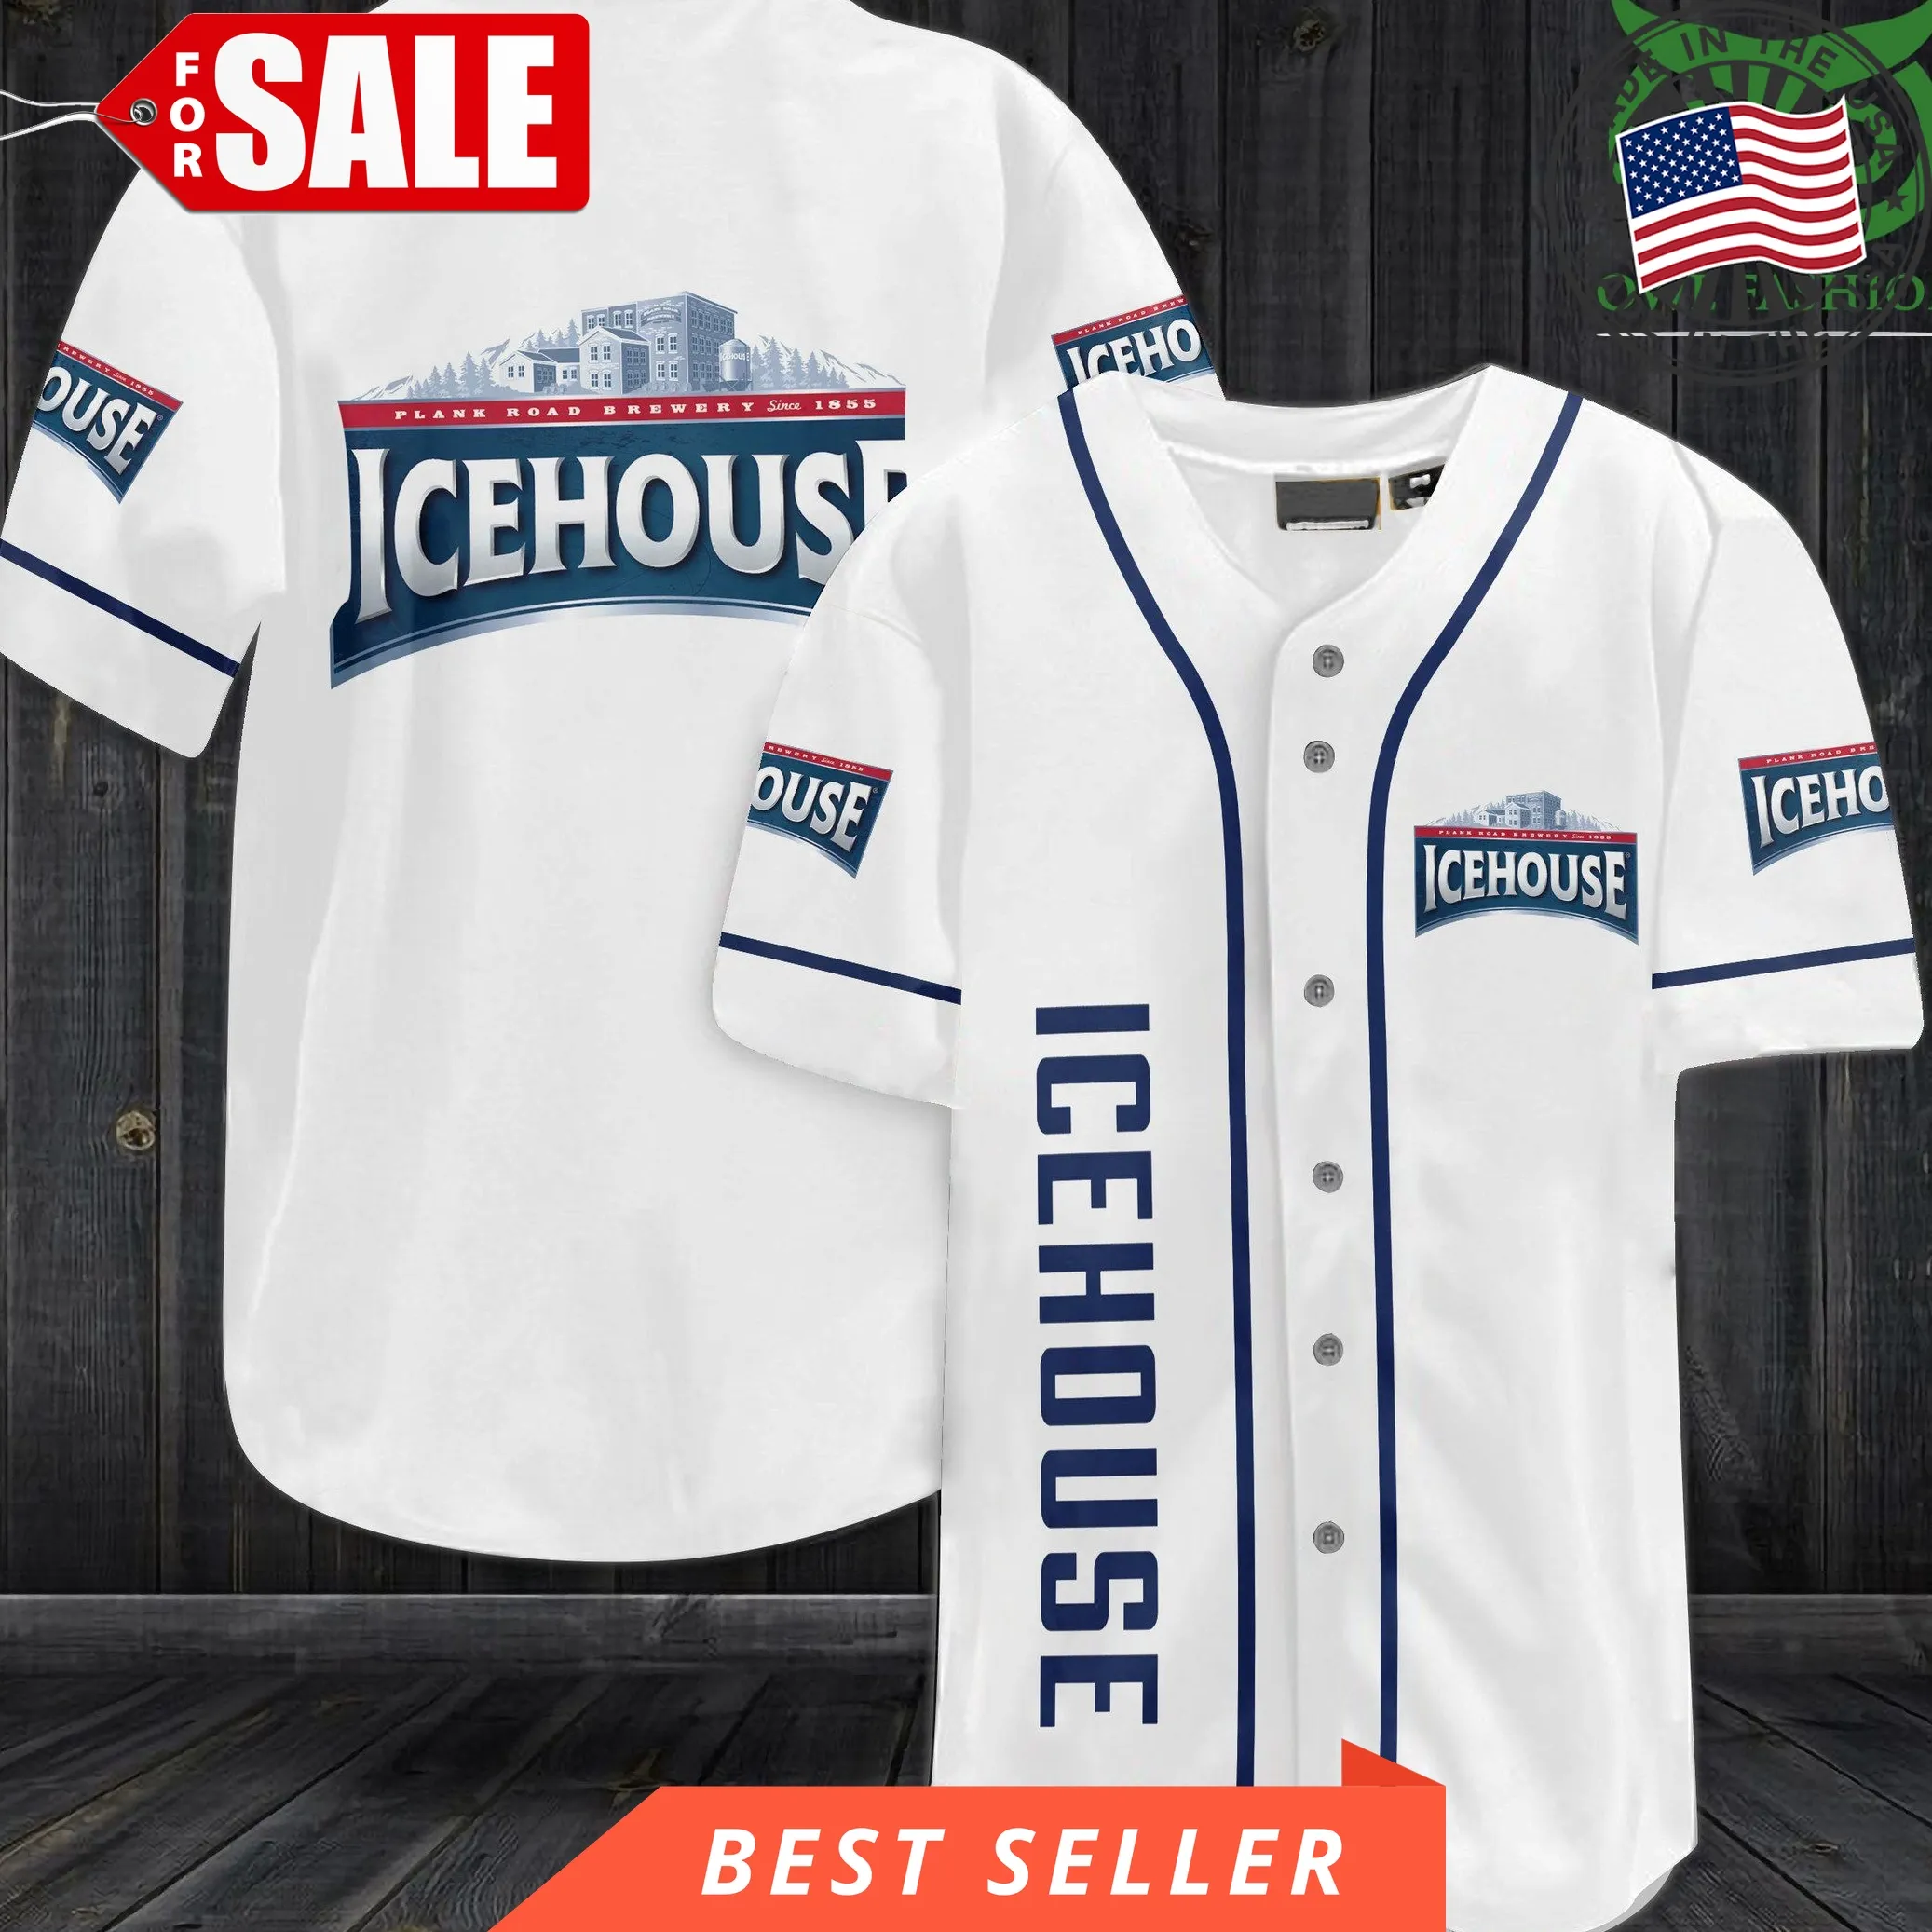 Icehouse White Baseball Jersey Shirt